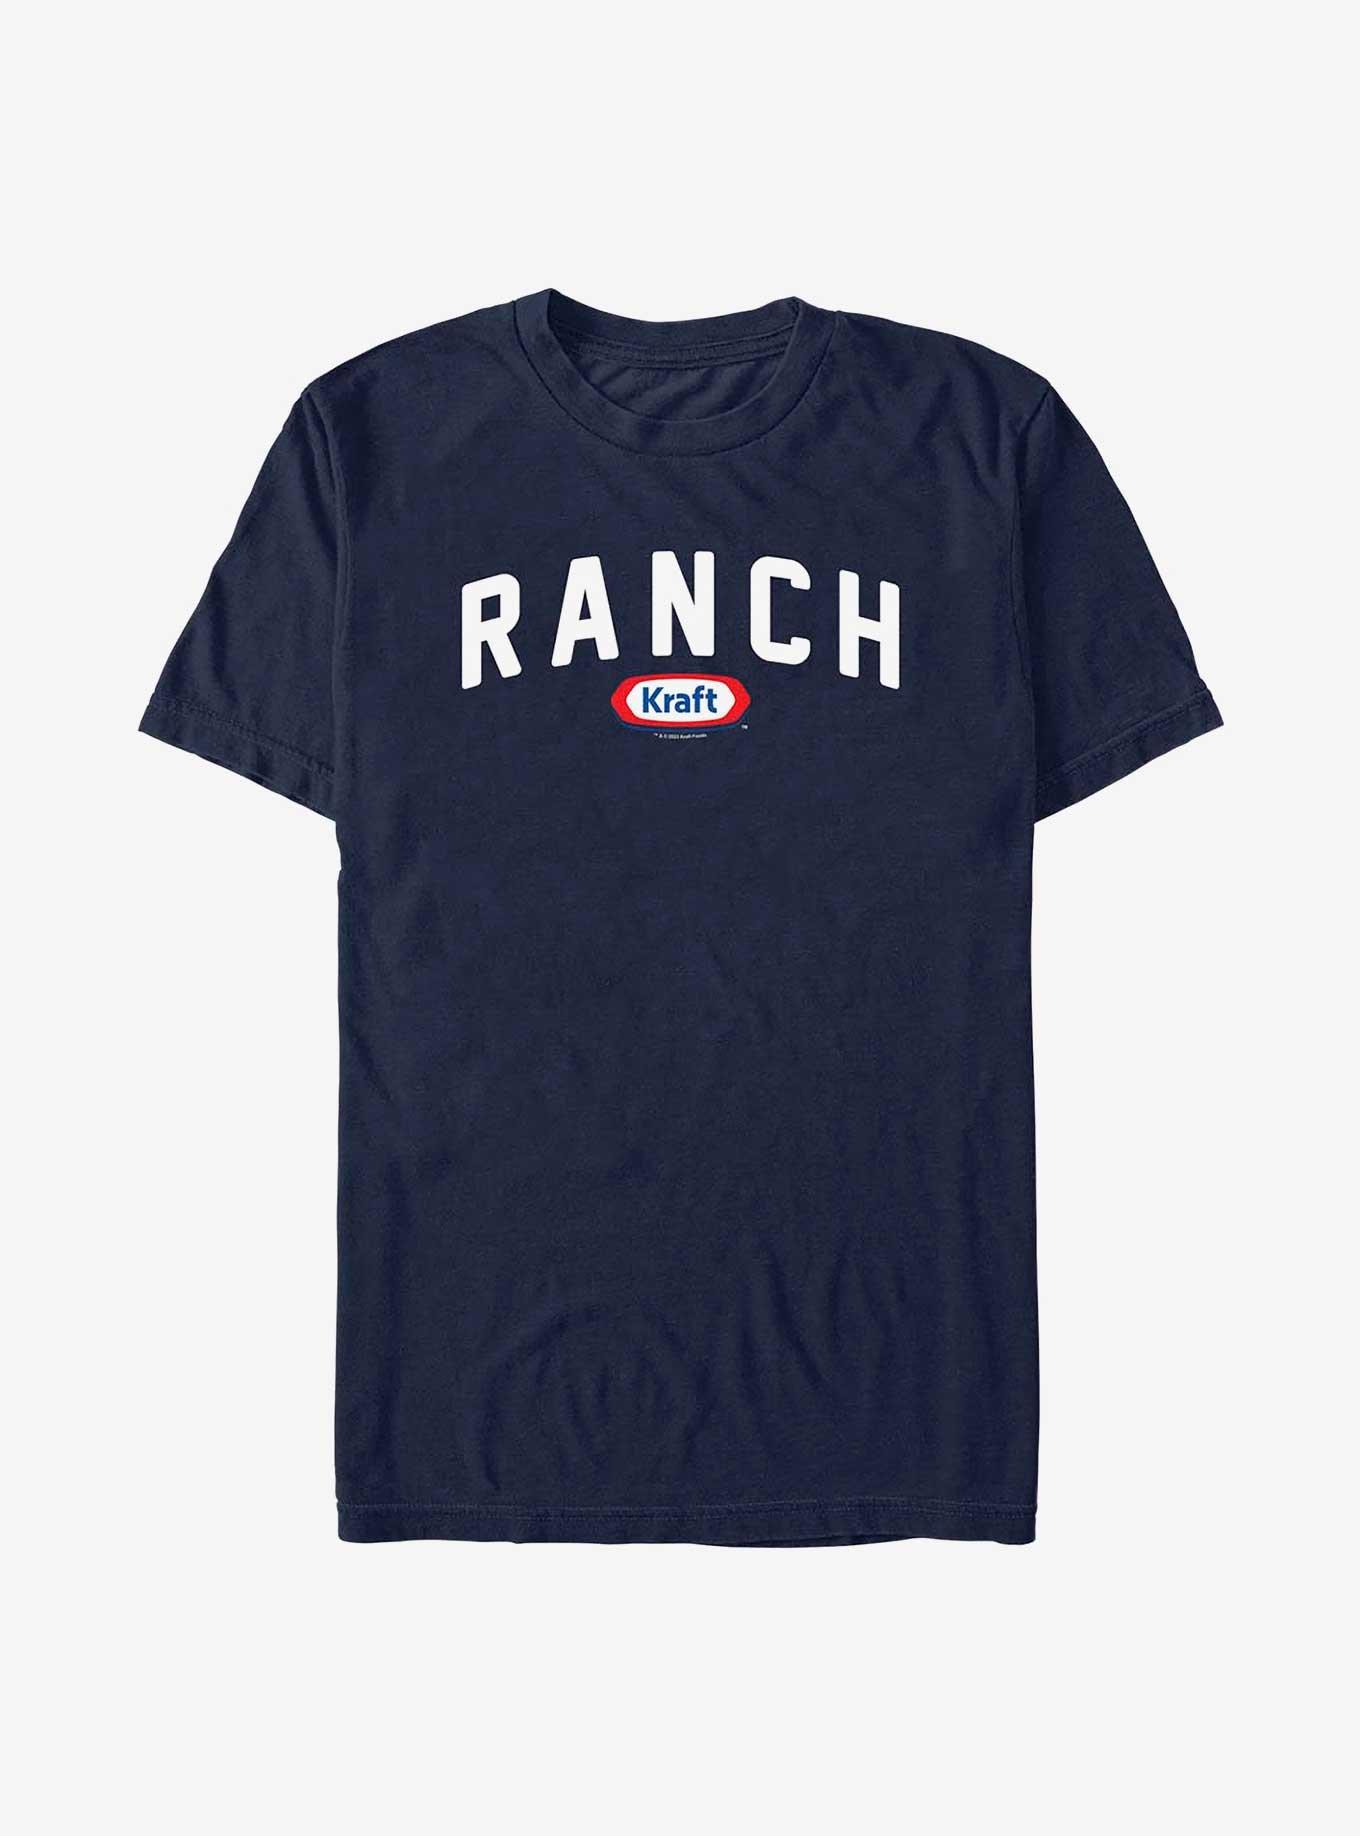 Kraft Ranch Athletic T-Shirt, , hi-res